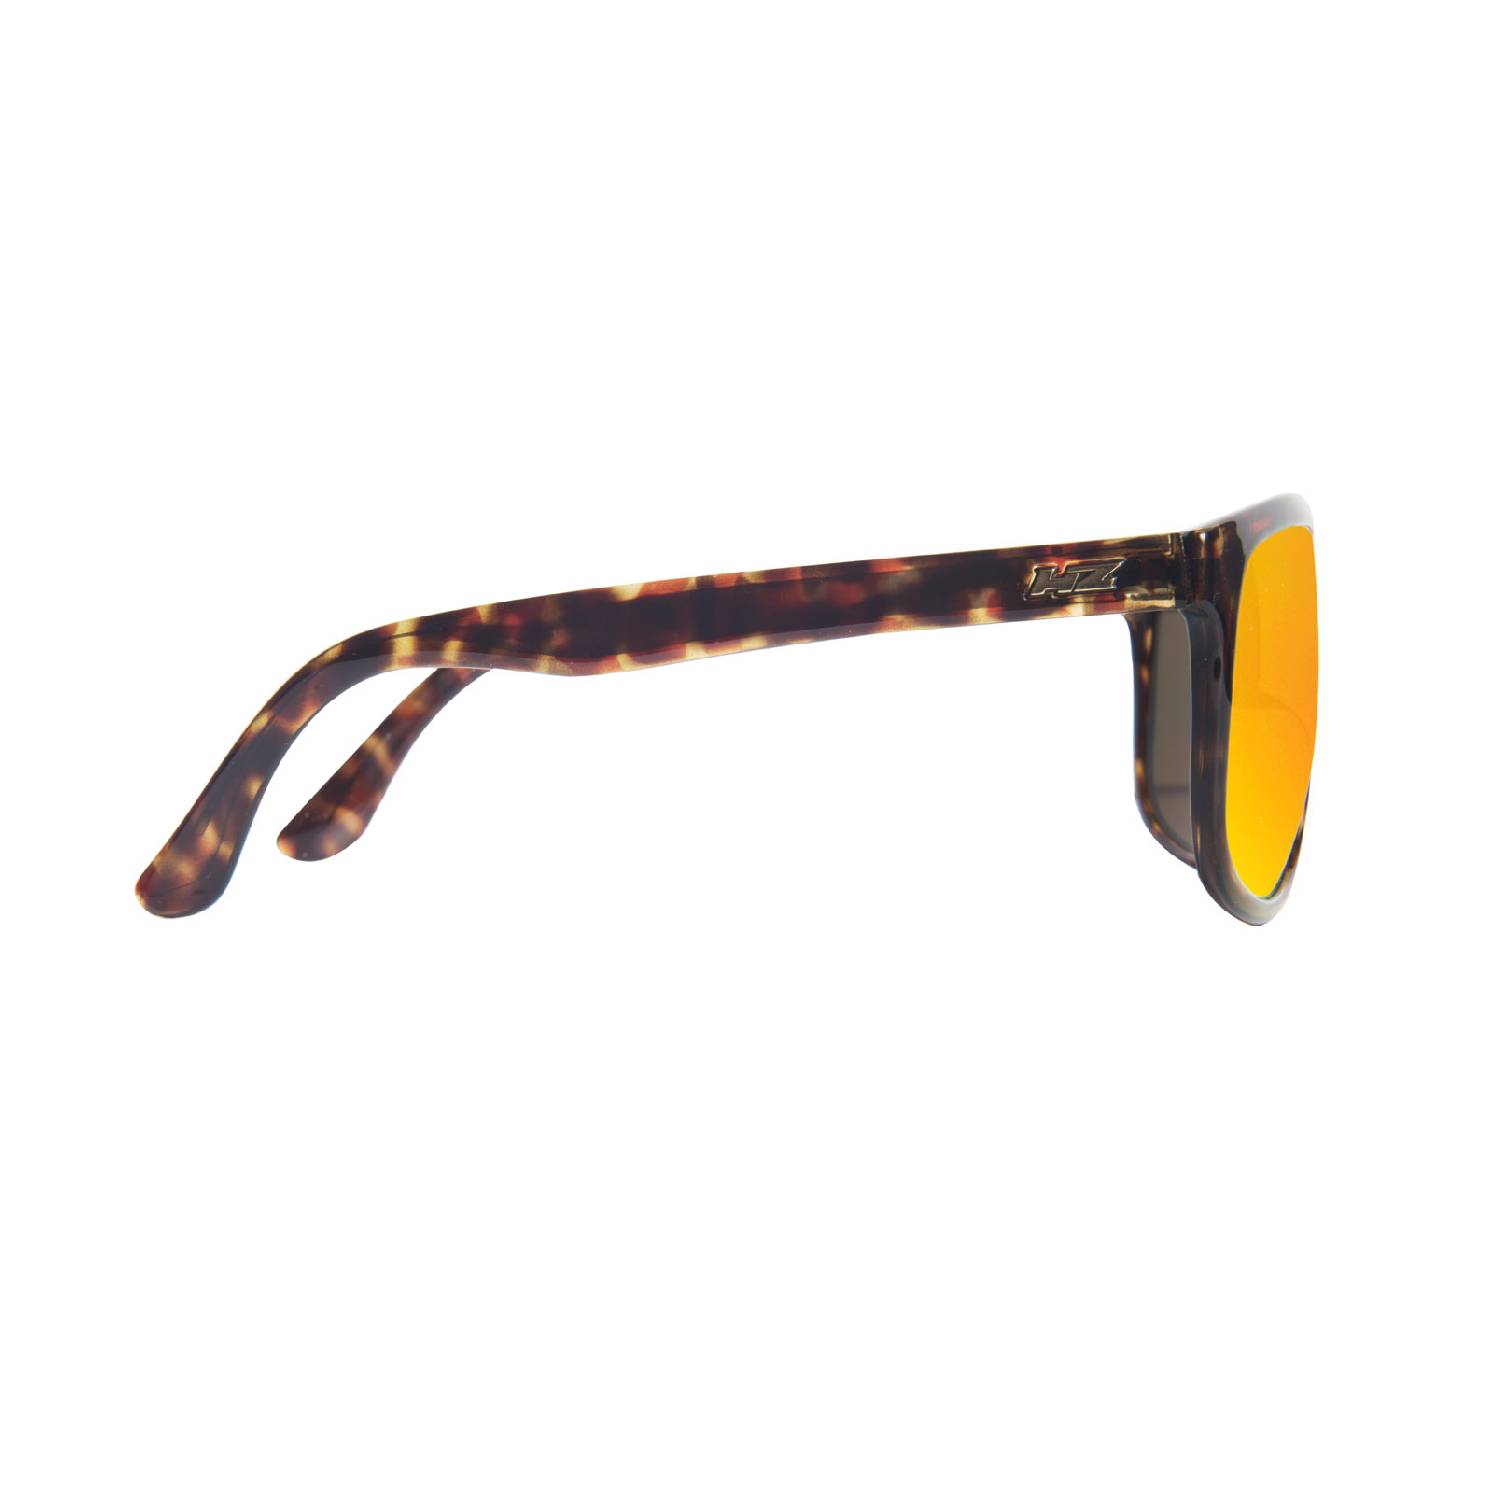 HZ Swish SE-600003-HZ sports glasses with orange-toned mirrored lenses